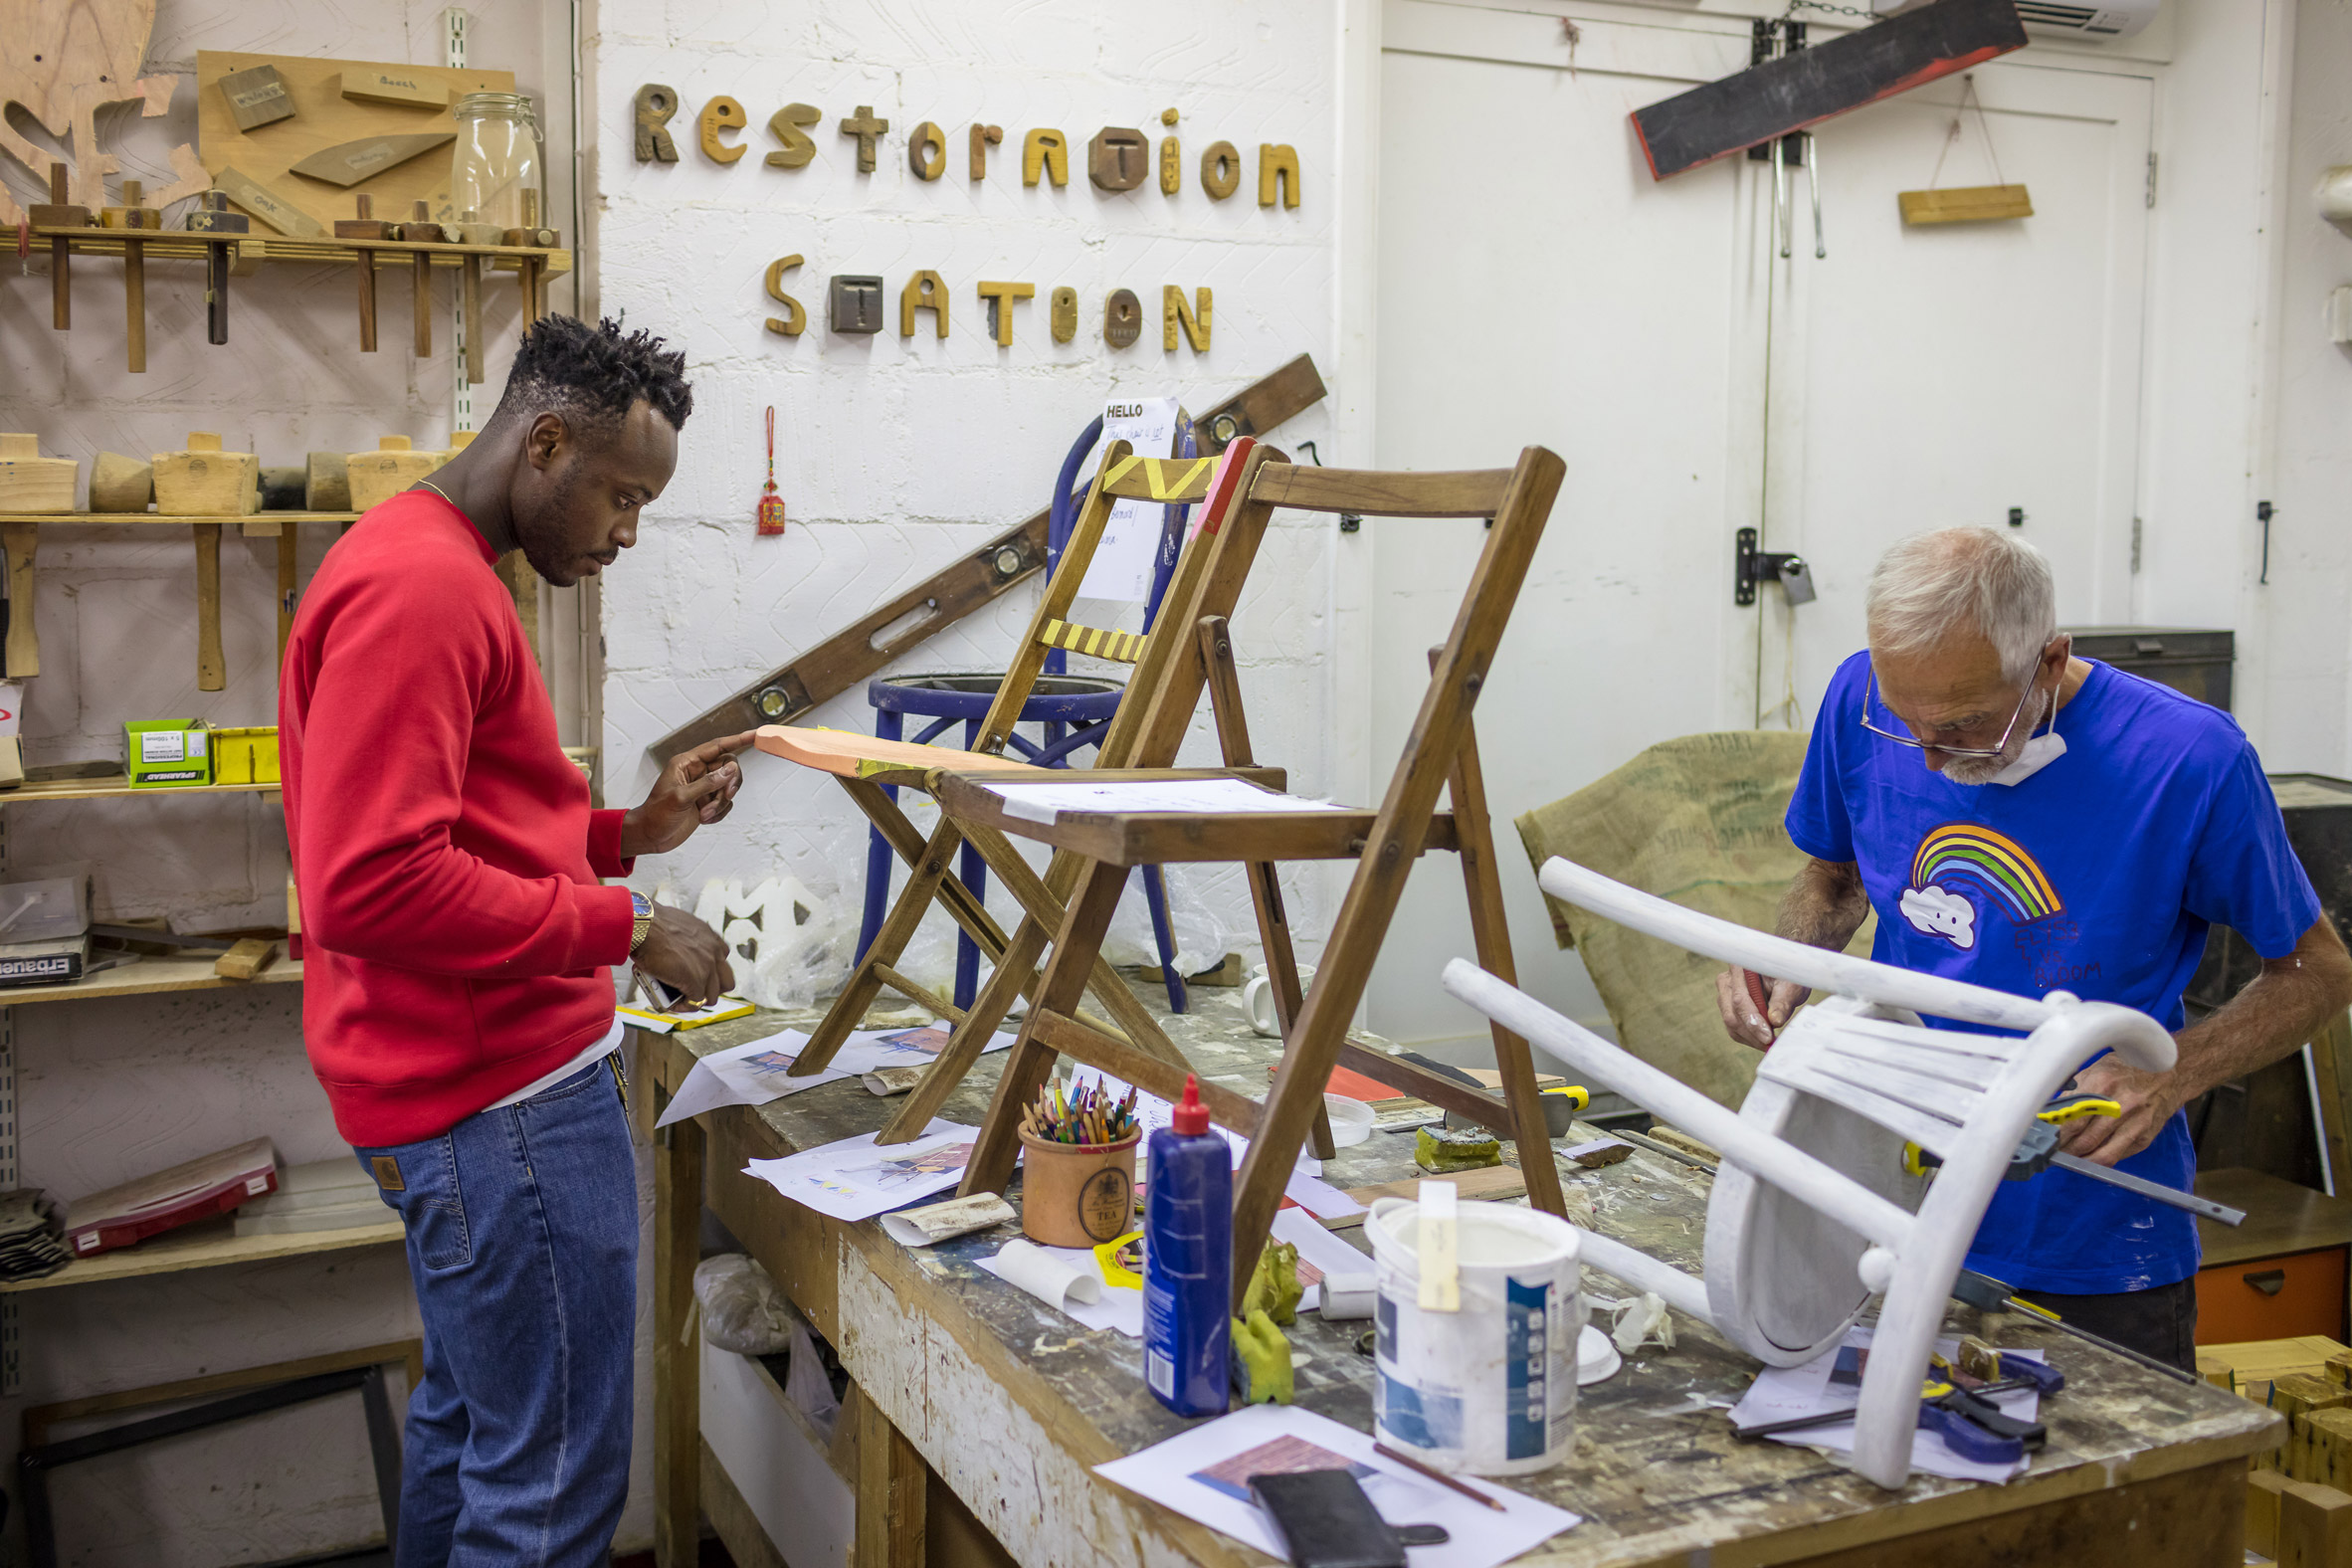 Yinka Ilori creates chairs in Restoration Station workshops